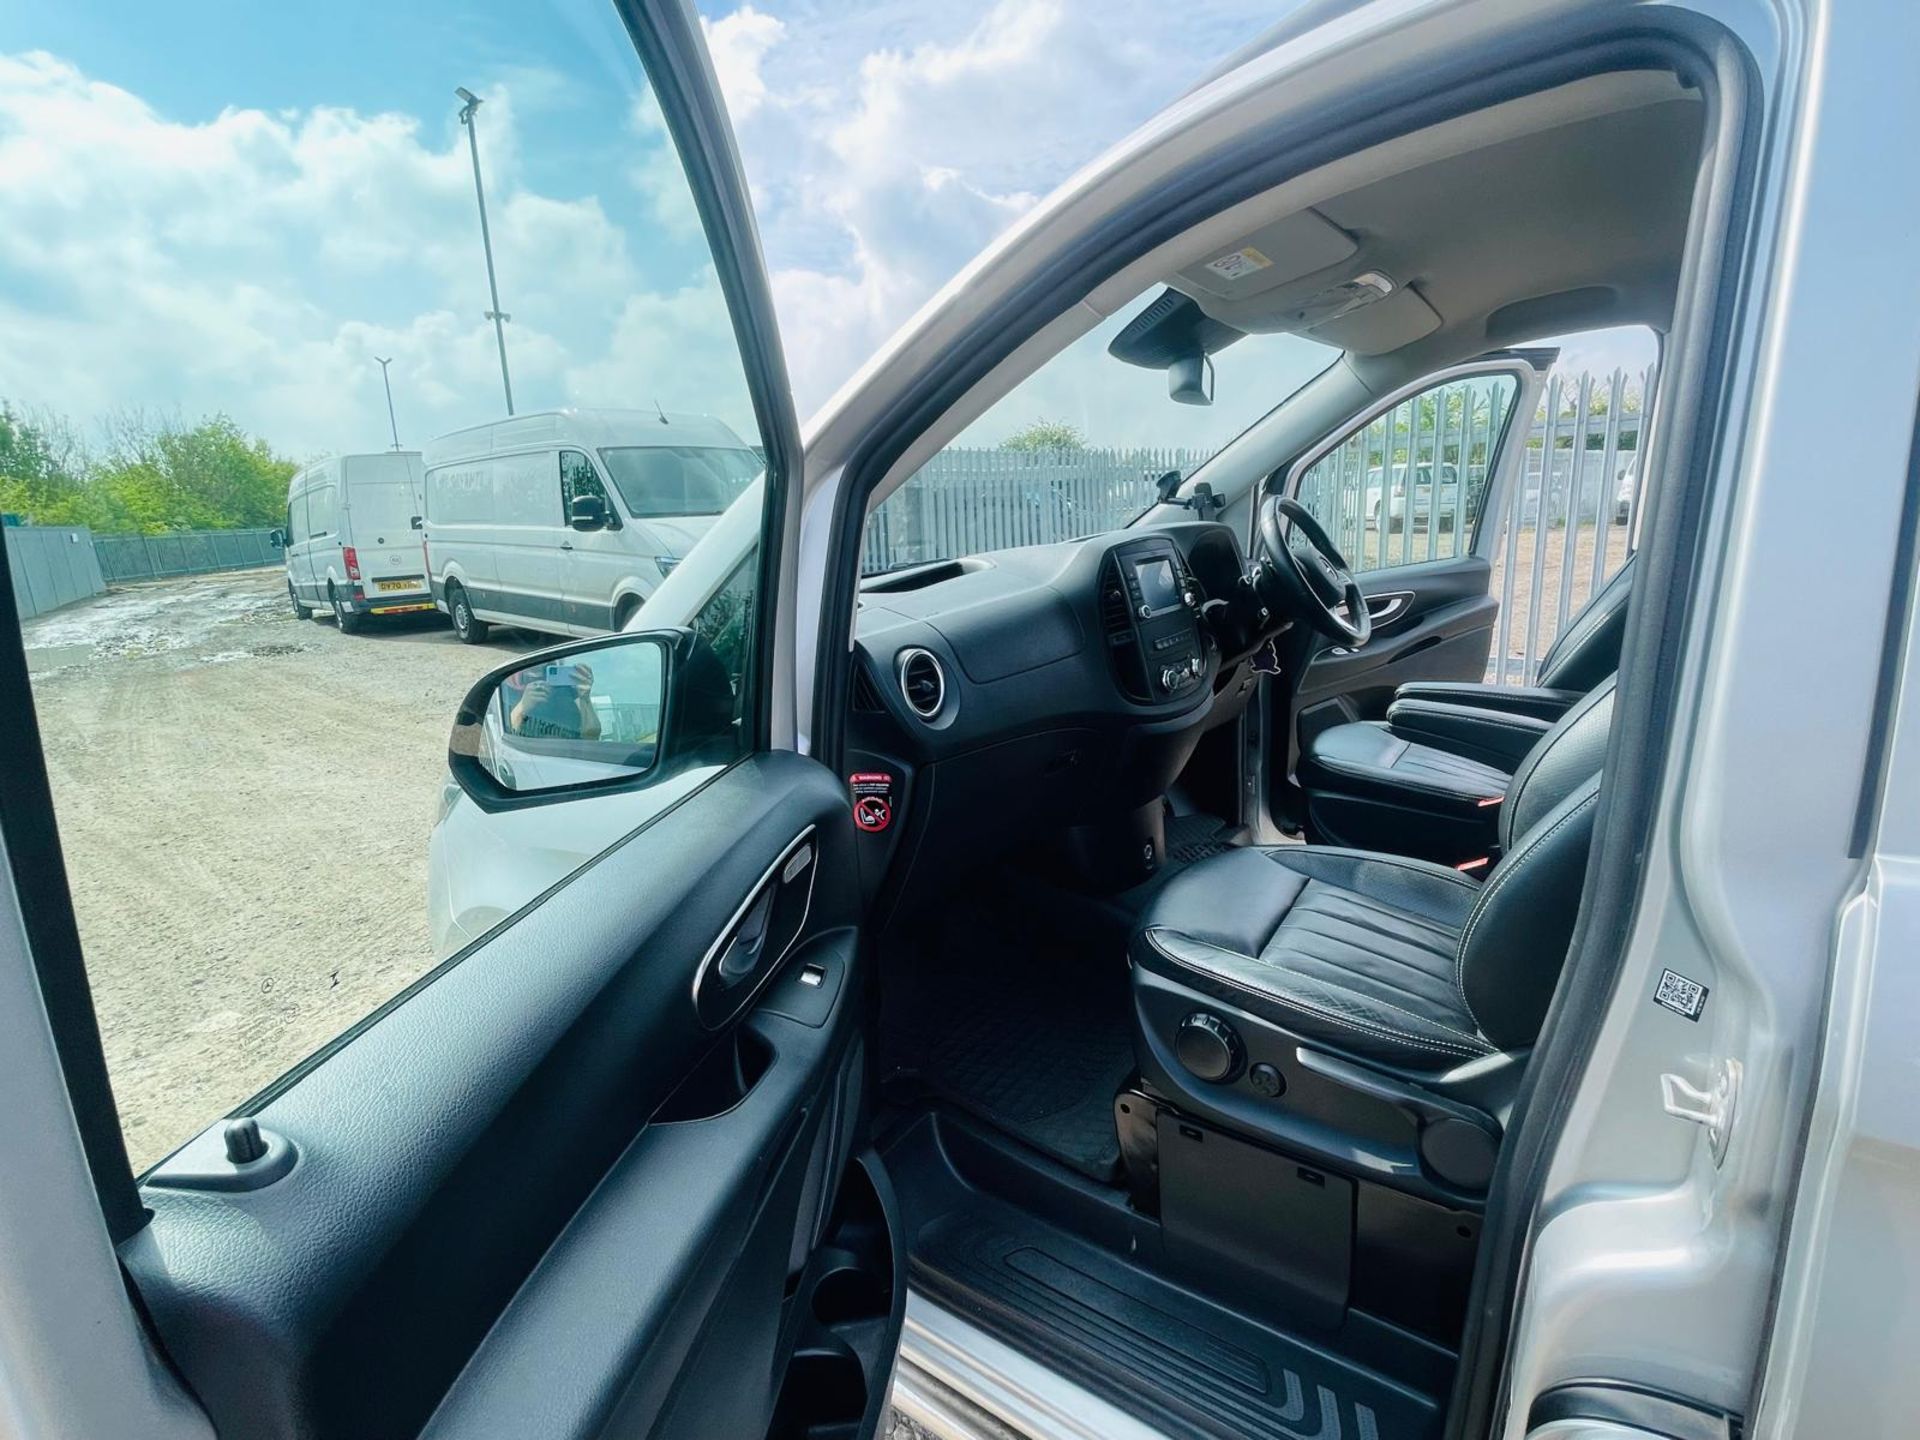 Mercedes-Benz Vito Premium 2.1 119 CDI 7G Tronic Crew Cab LWB Automatic 2019'19 Reg'- Alloy Wheels - Image 20 of 31